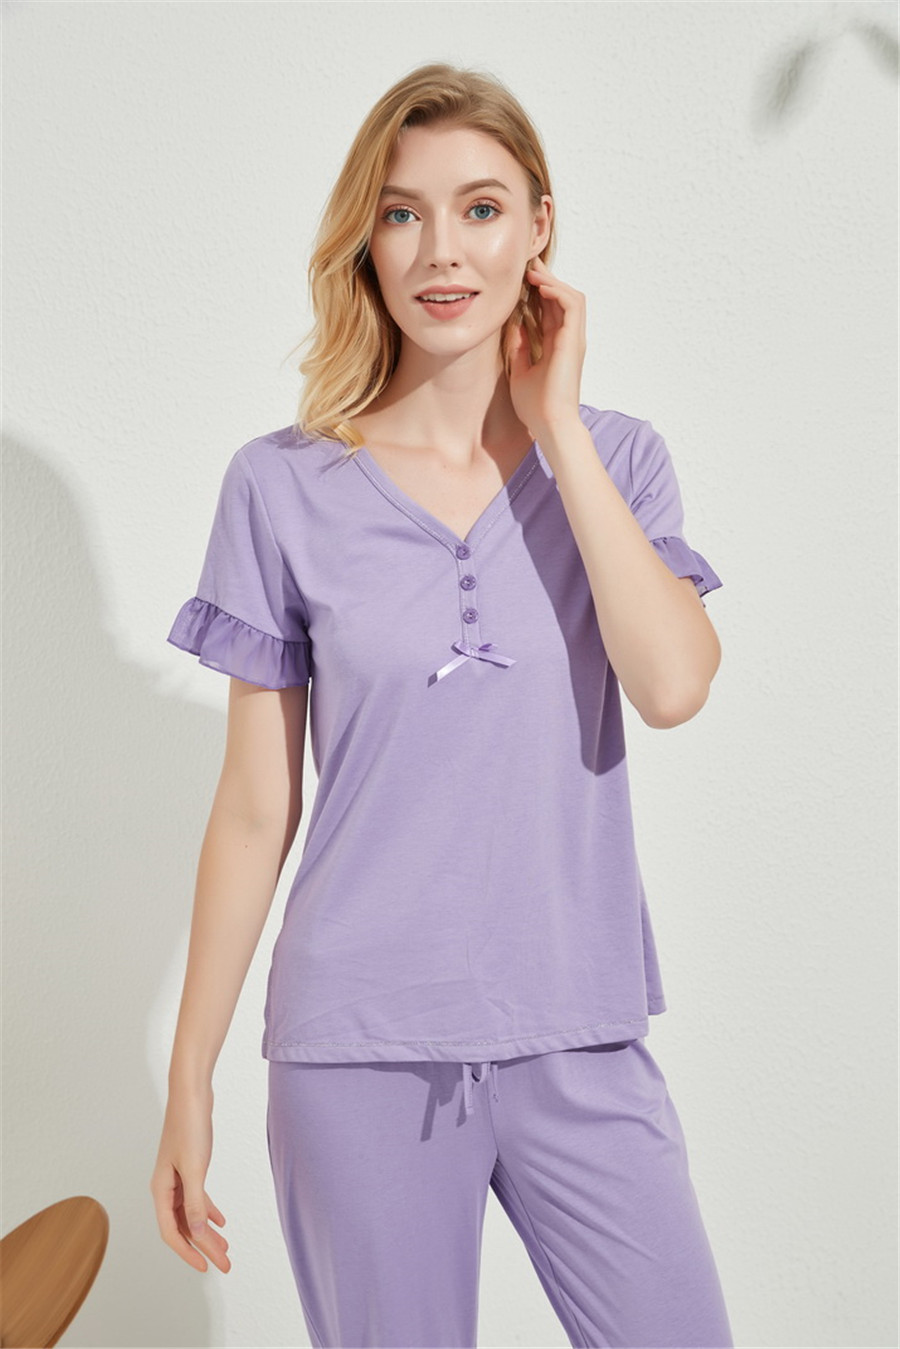 Womens V-neck Sleepwear Short Sleeve Long Pant Pajama Set Soft Loung Wear Comfortable Nightwear